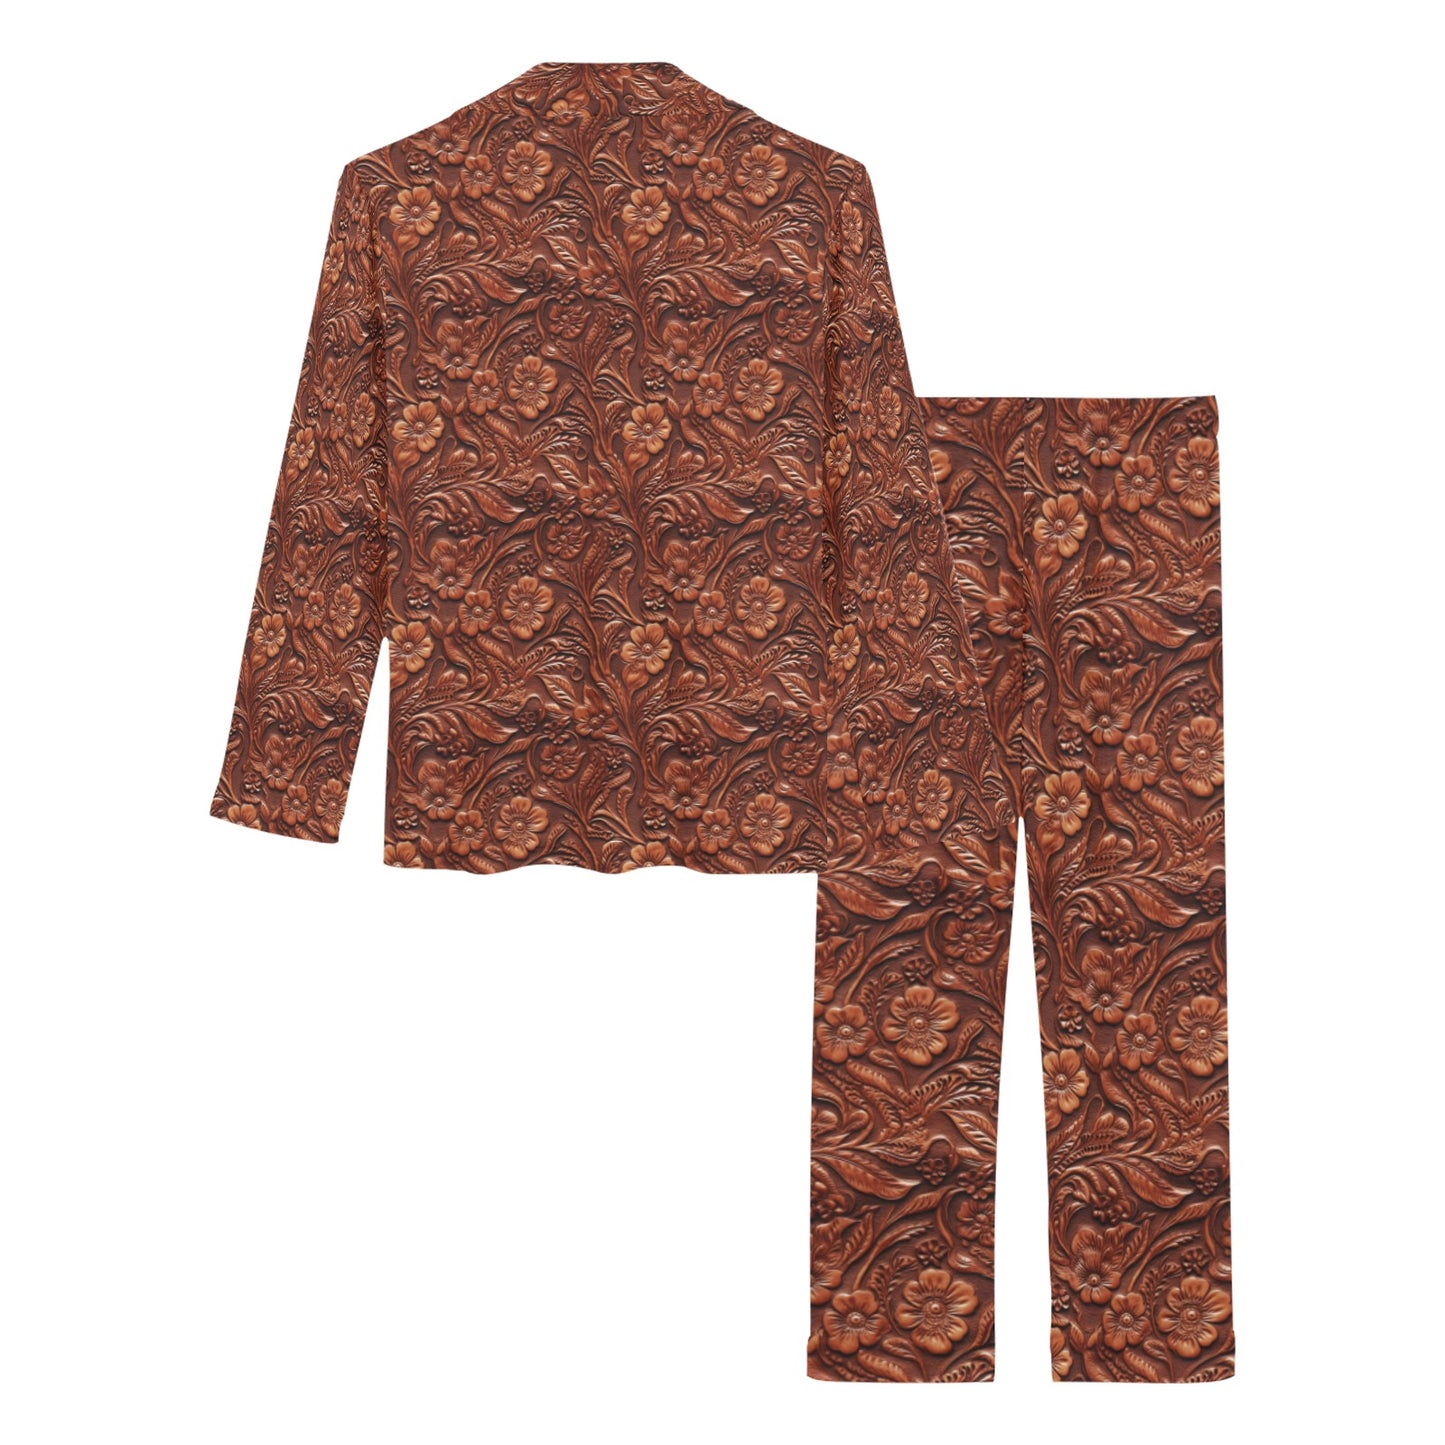 Leather Floral Print Women's Long Pajama Set